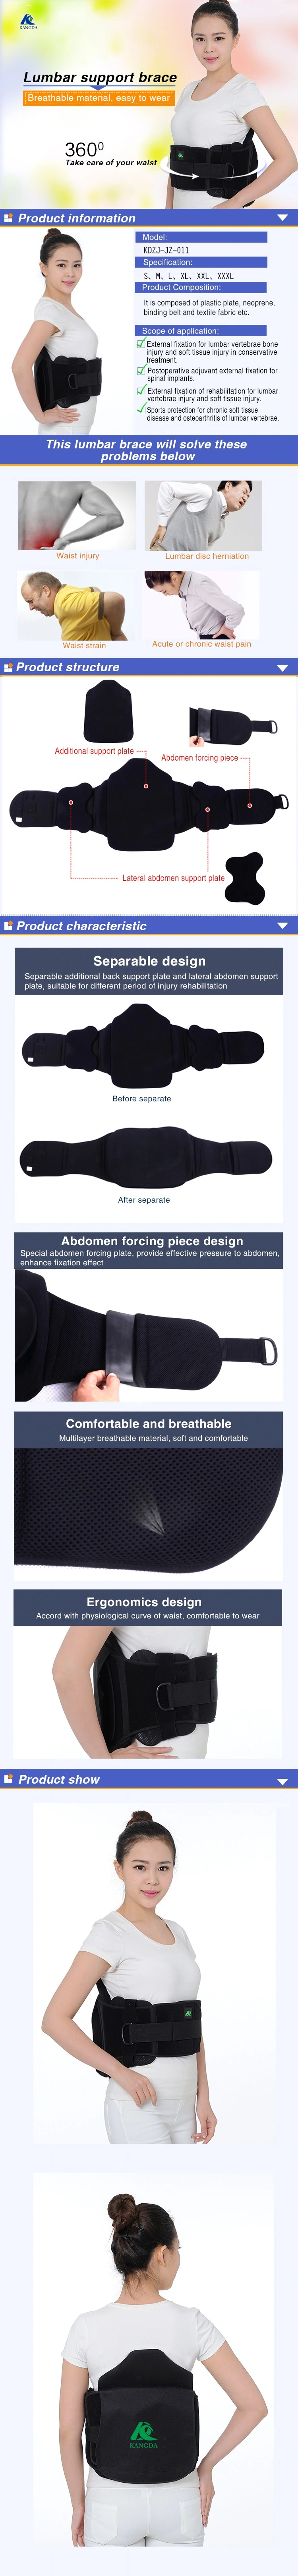 Factory Price Lumbar Support Lower Lumbar Support Medical Belt Waist Brace with Back Panel